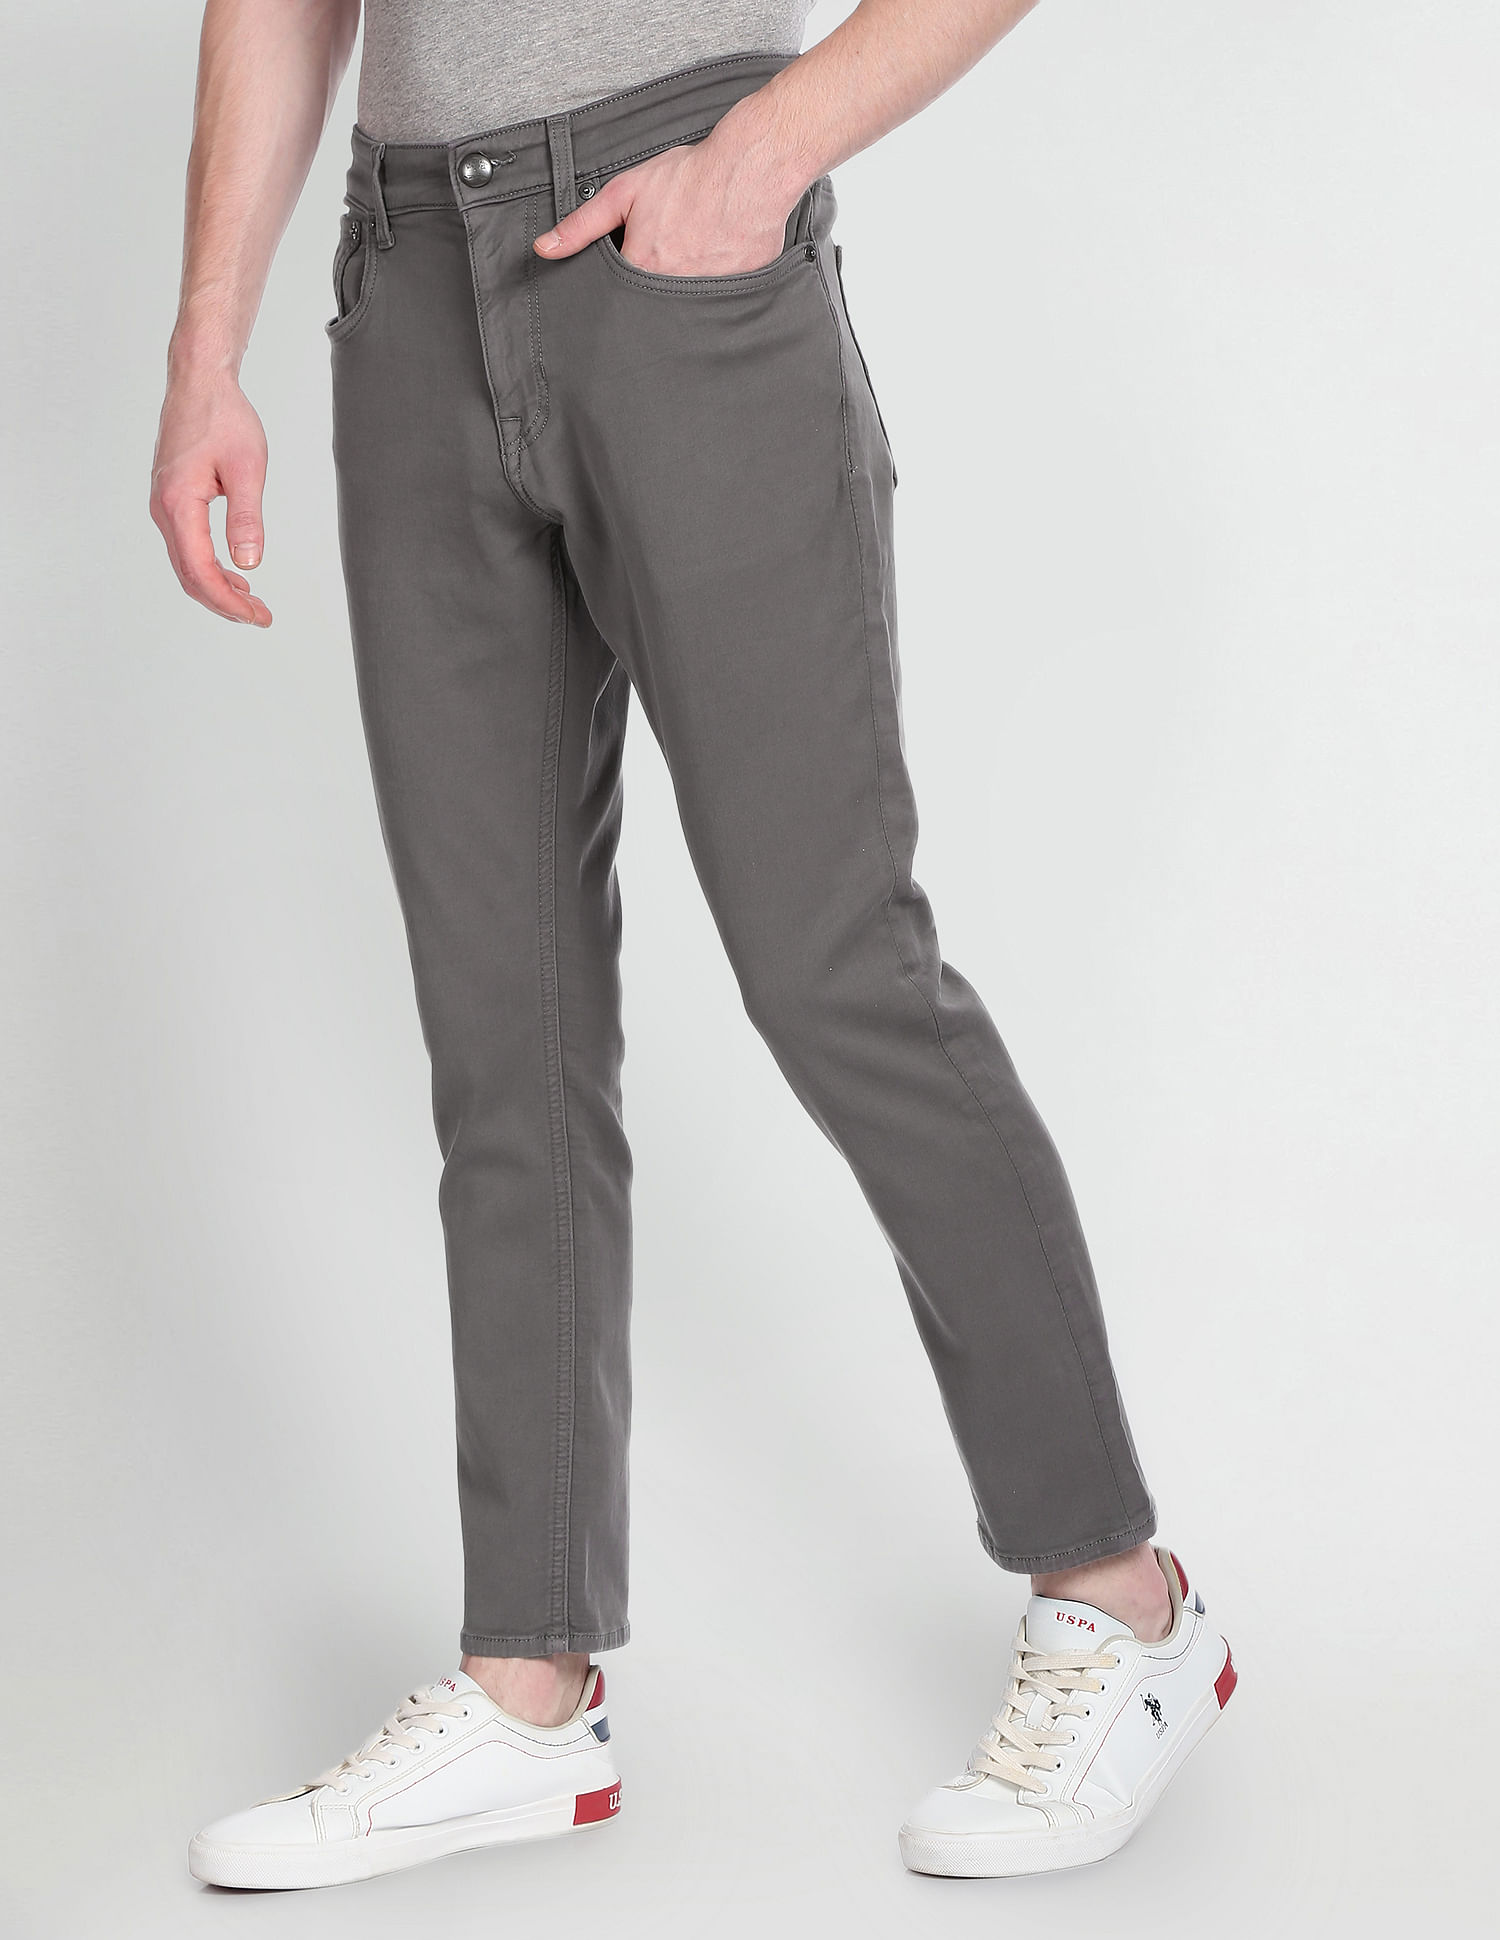 Buy Tempus Jeans for Men Design Code 11753 Grey 38 at Amazonin